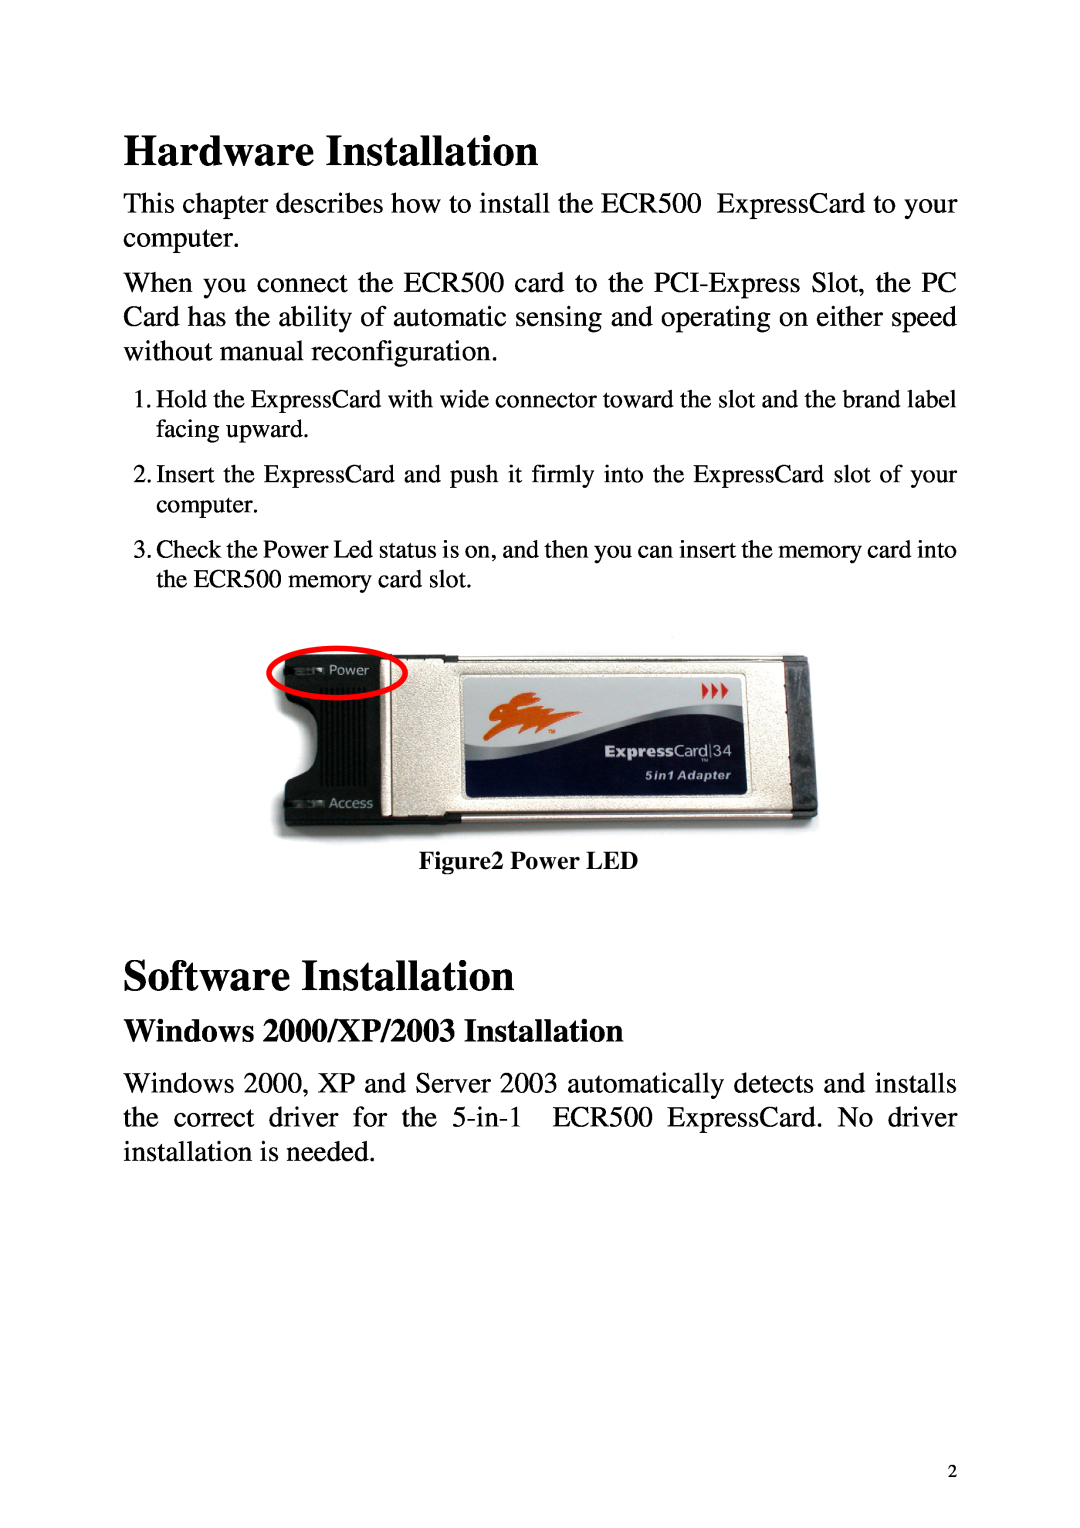 Abocom ECR500 user manual Hardware Installation, Software Installation, Windows 2000/XP/2003 Installation 